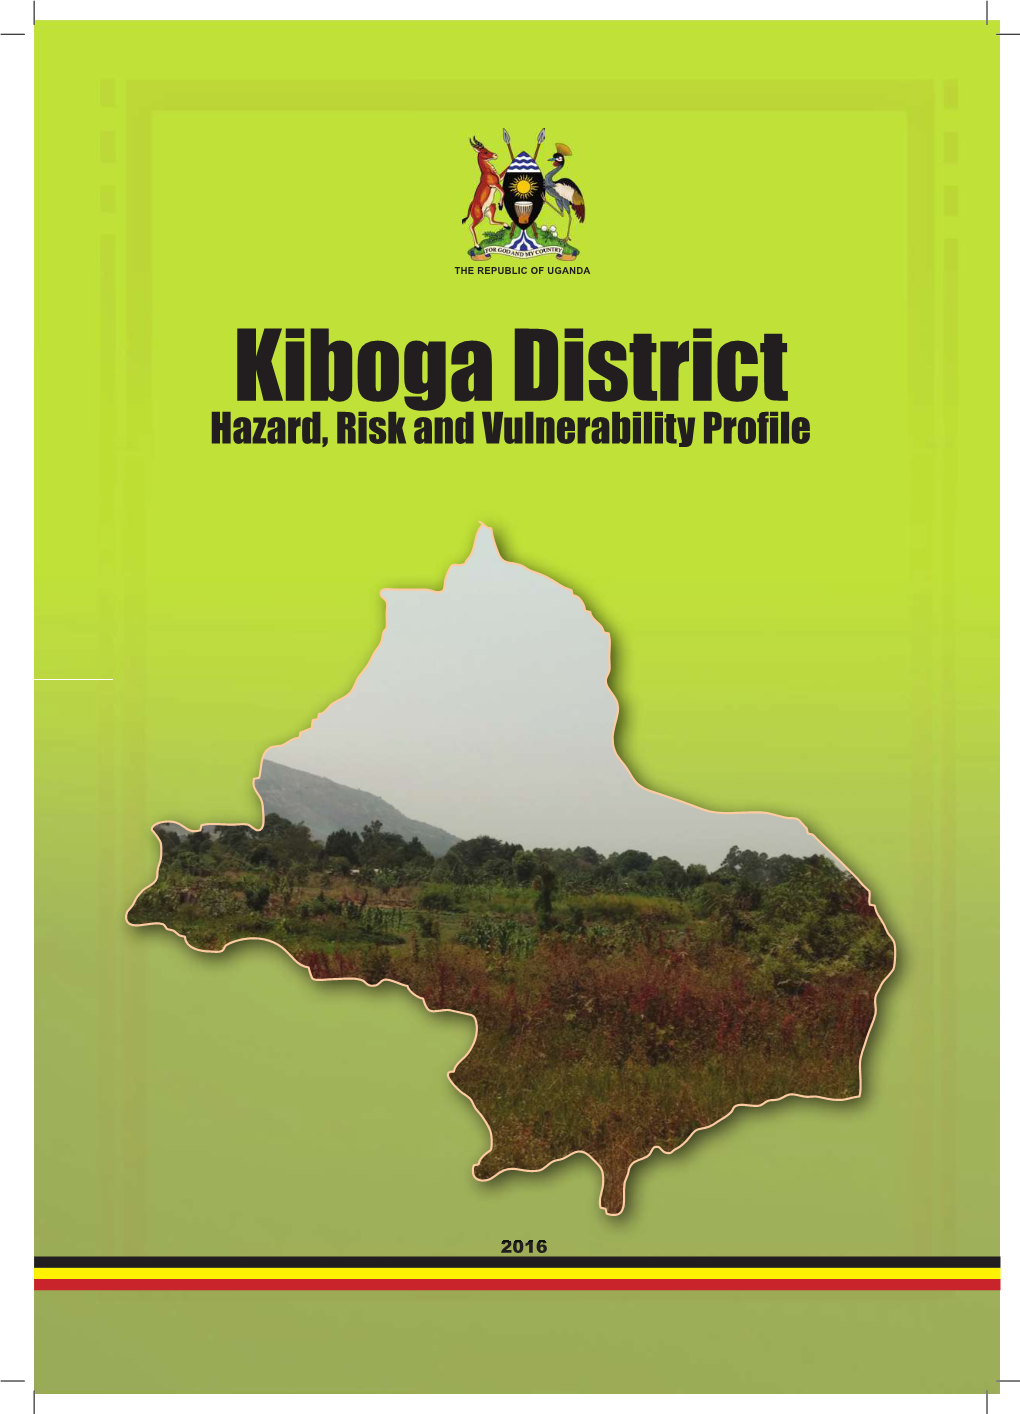 Kiboga District HRV Profile.Pdf